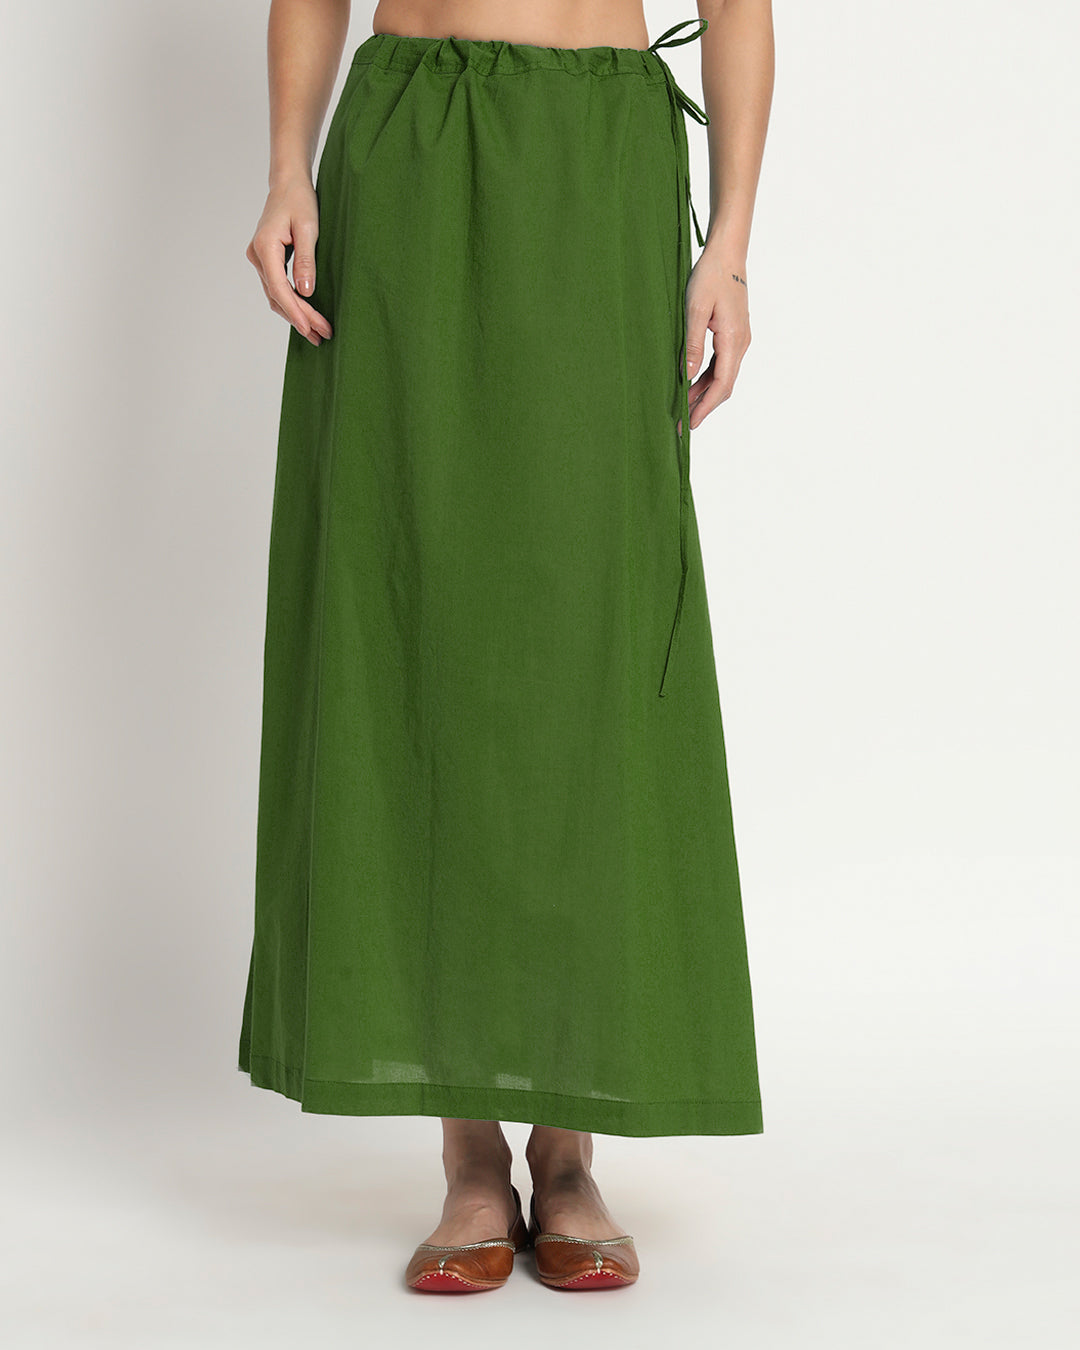 Combo: Black & Greening Spring Peekaboo Petticoat- Set of 2